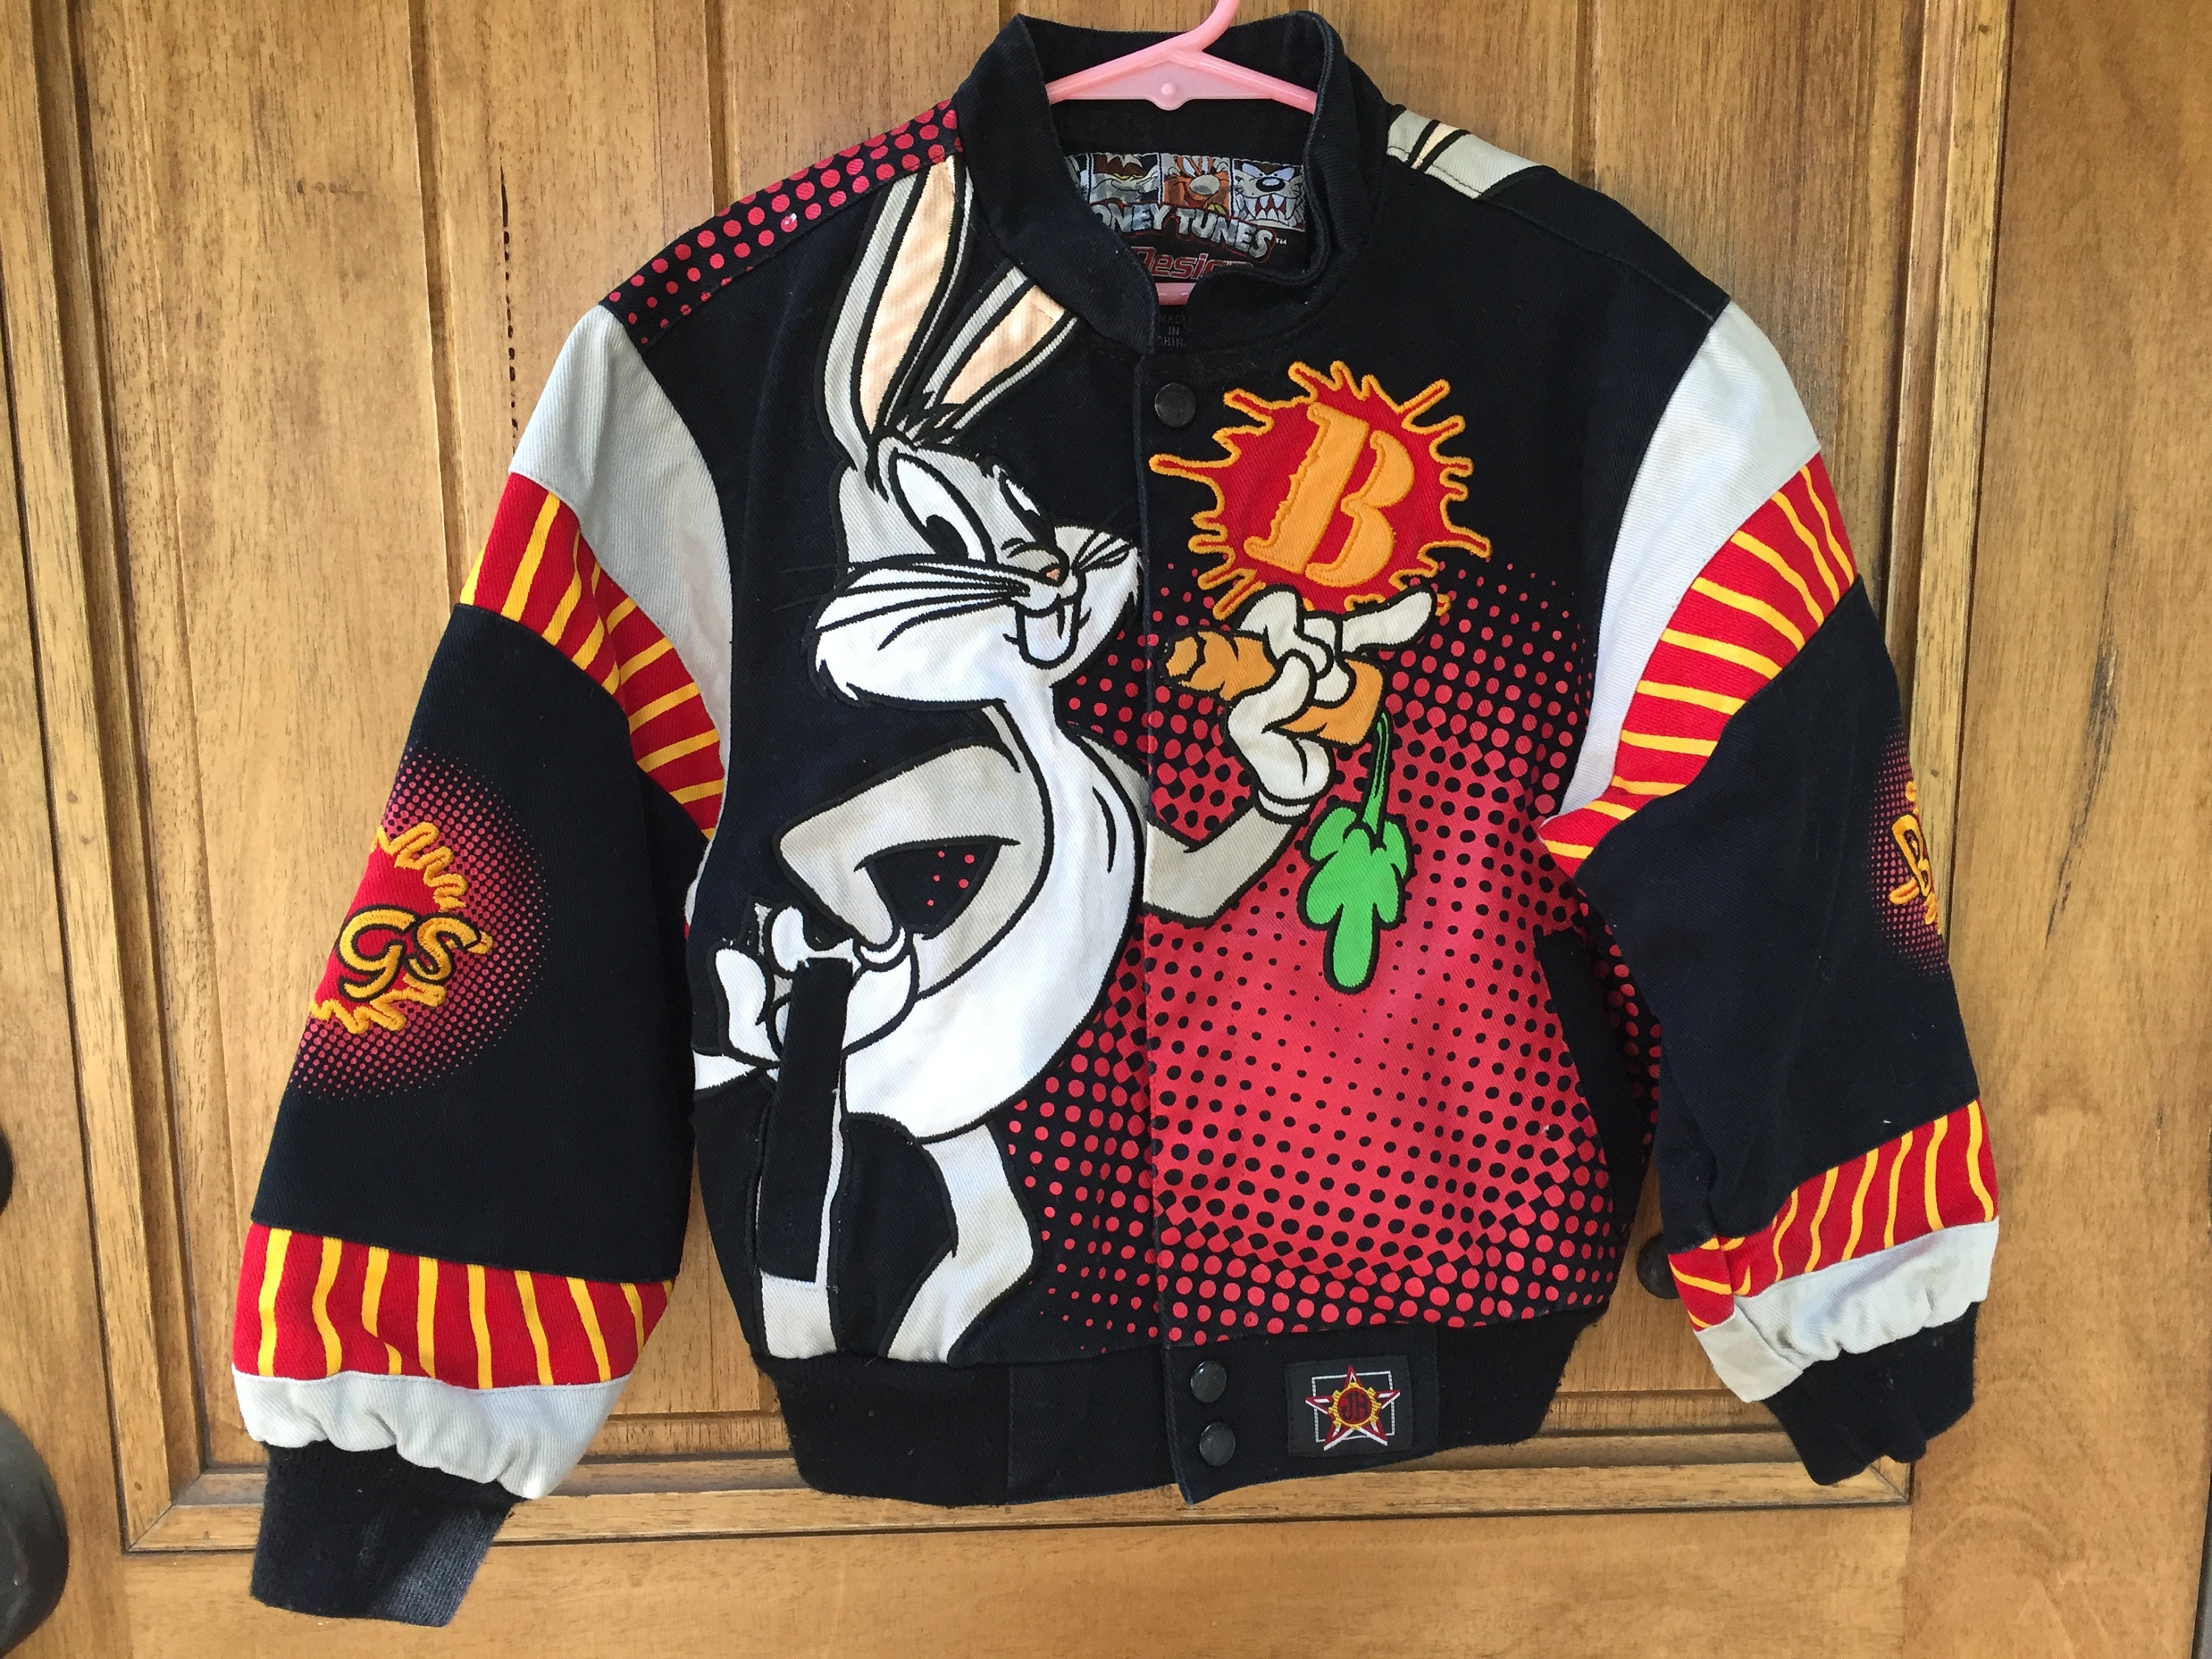 Maker of Jacket Vintage Bugs Bunny Varsity Jacket